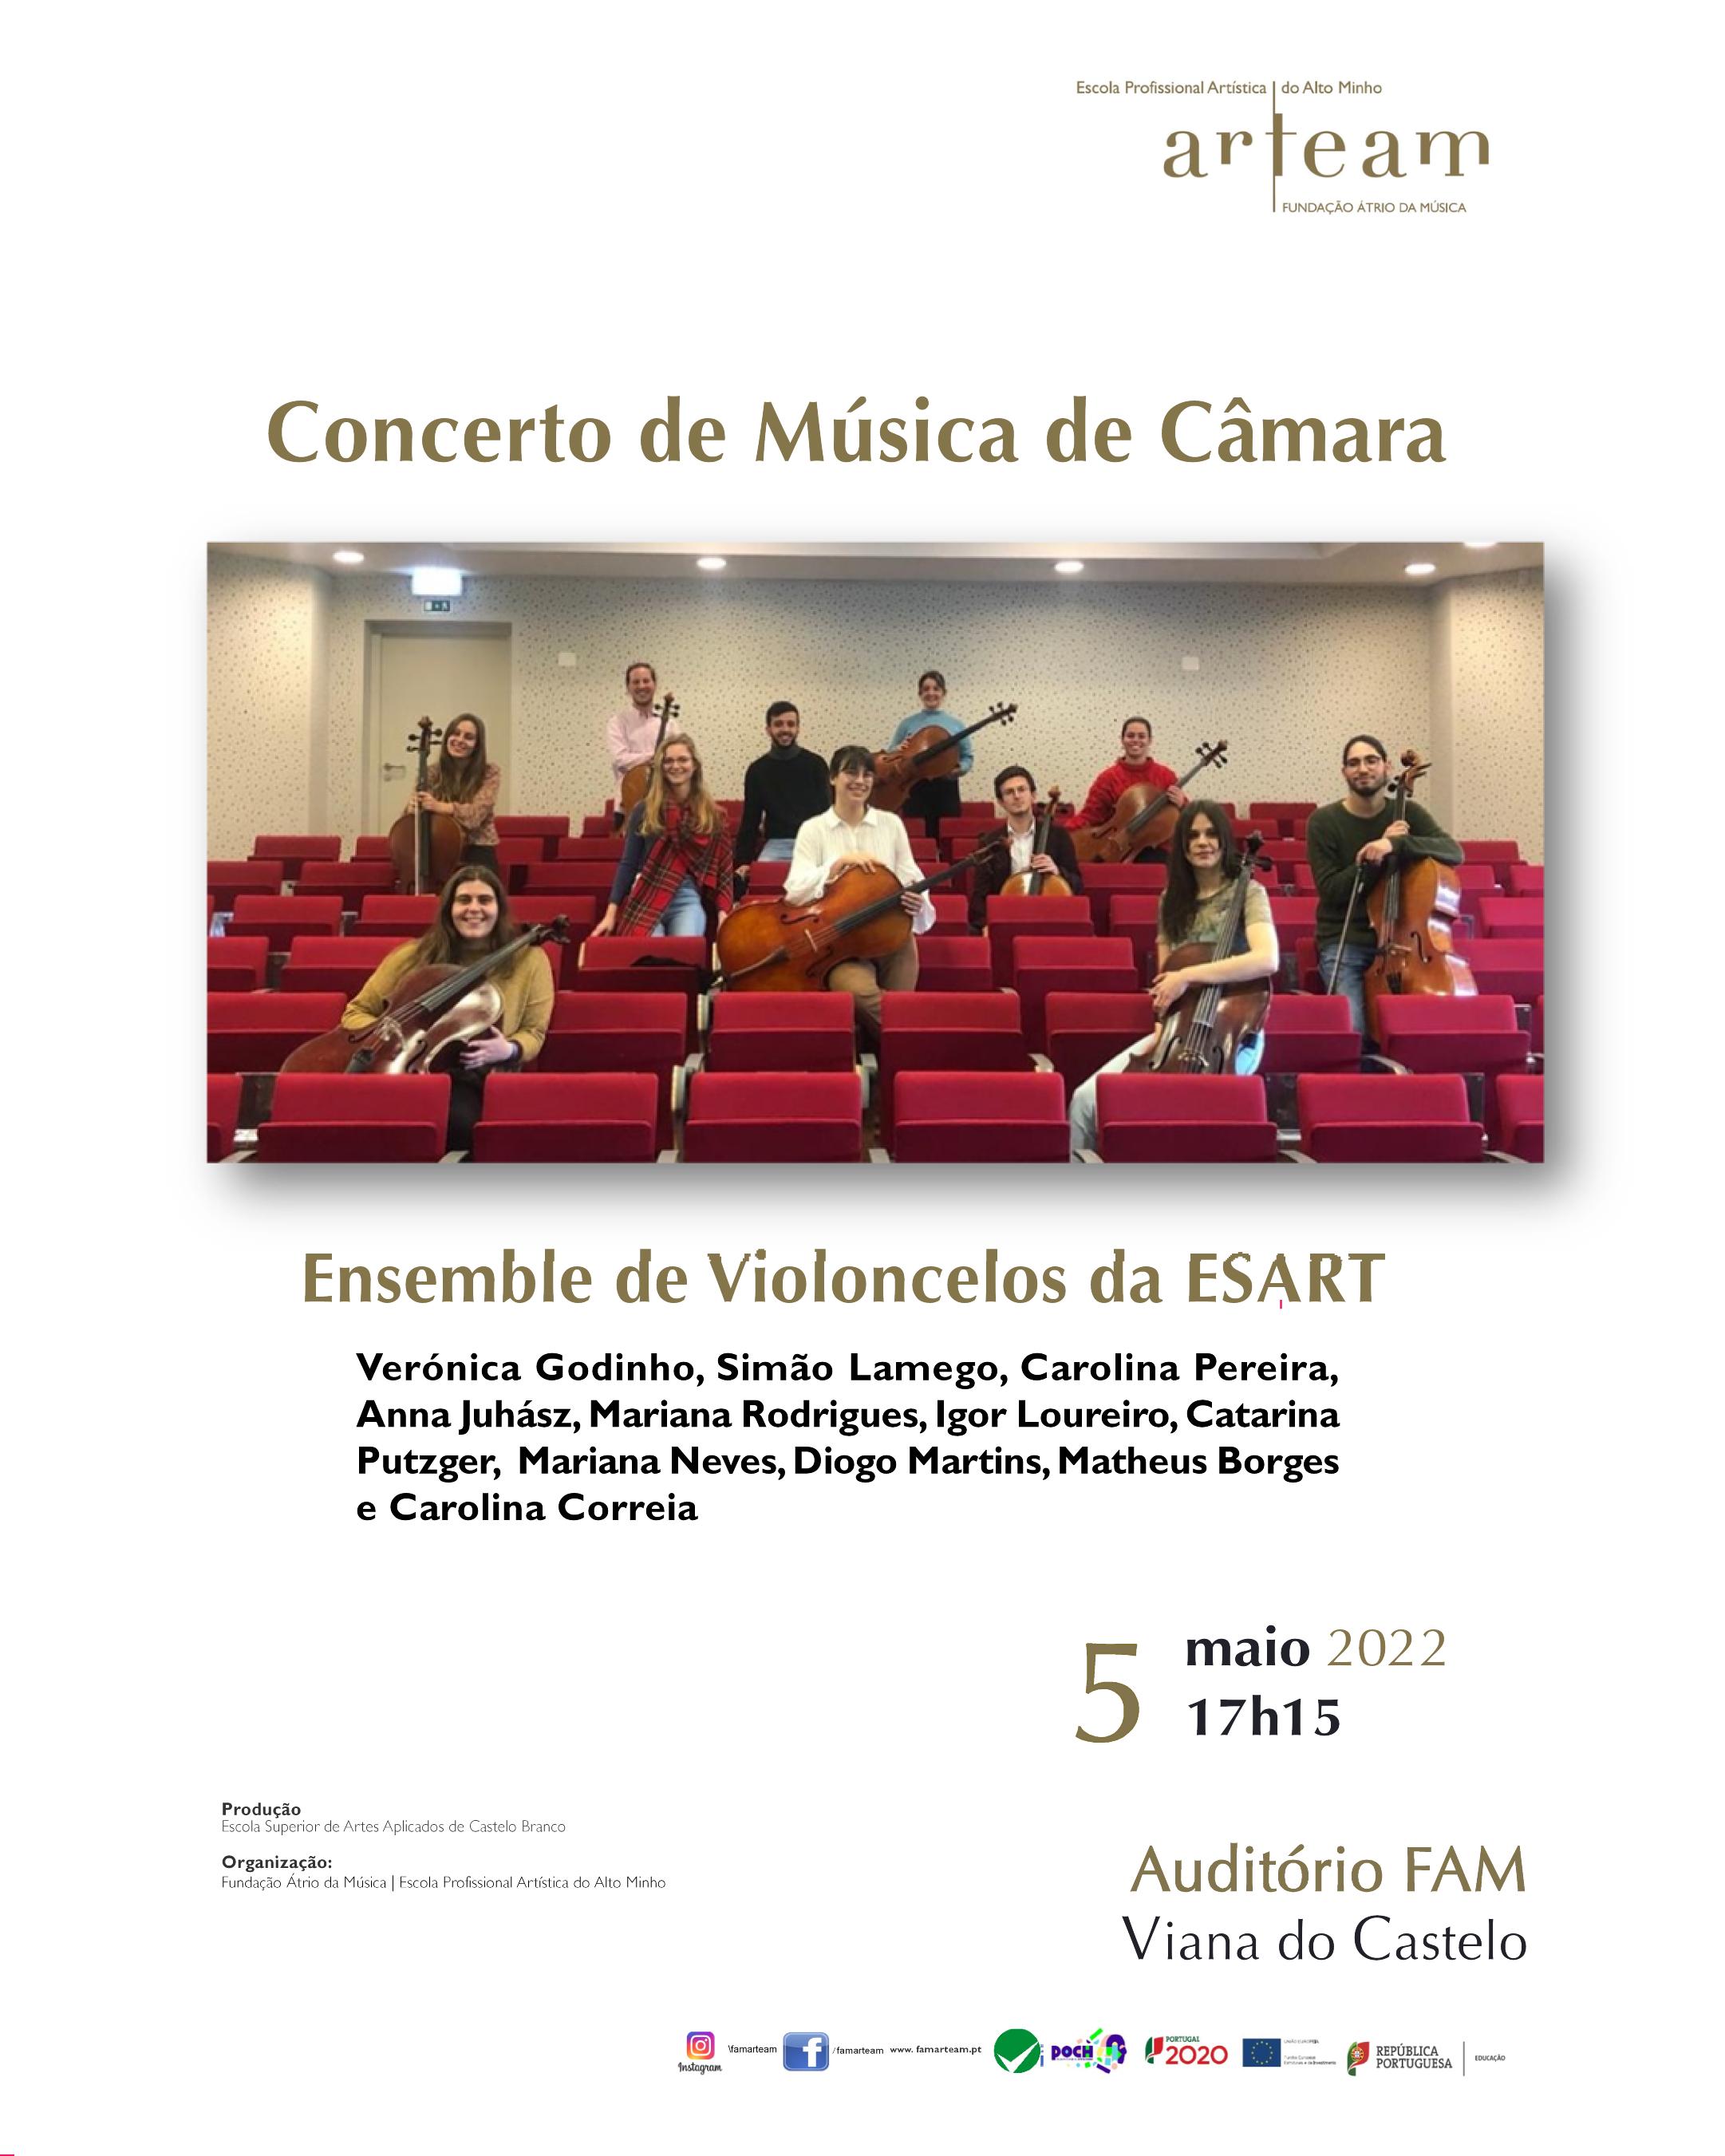 Recital do Ensemble de Violoncelos da ESART na ARTEAM